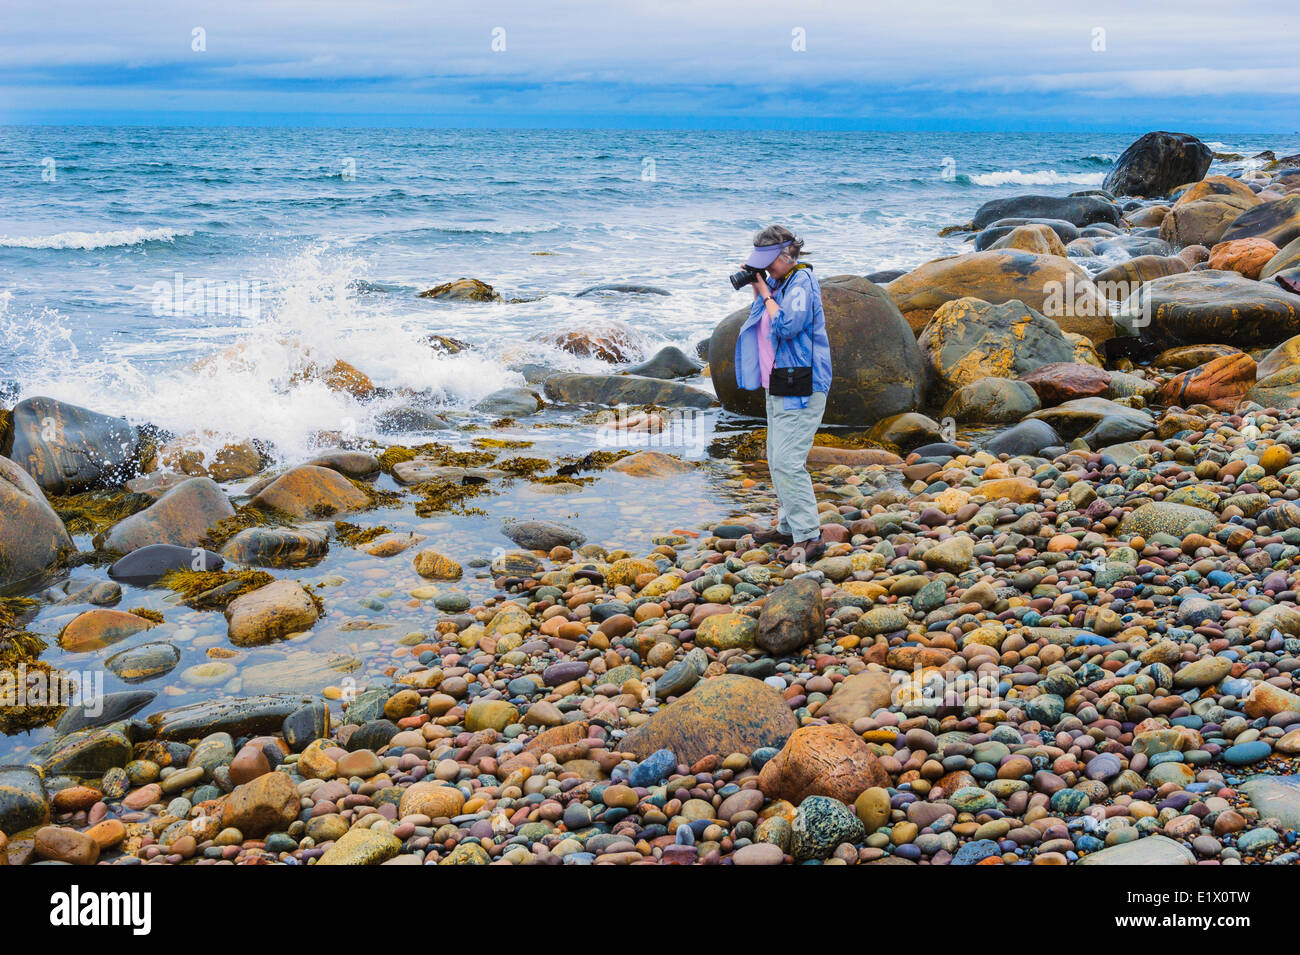 Tourist photographs incoming Atlantic Ocean waves in Gros Morne National Park, Newfoundland. Canada. MR Stock Photo